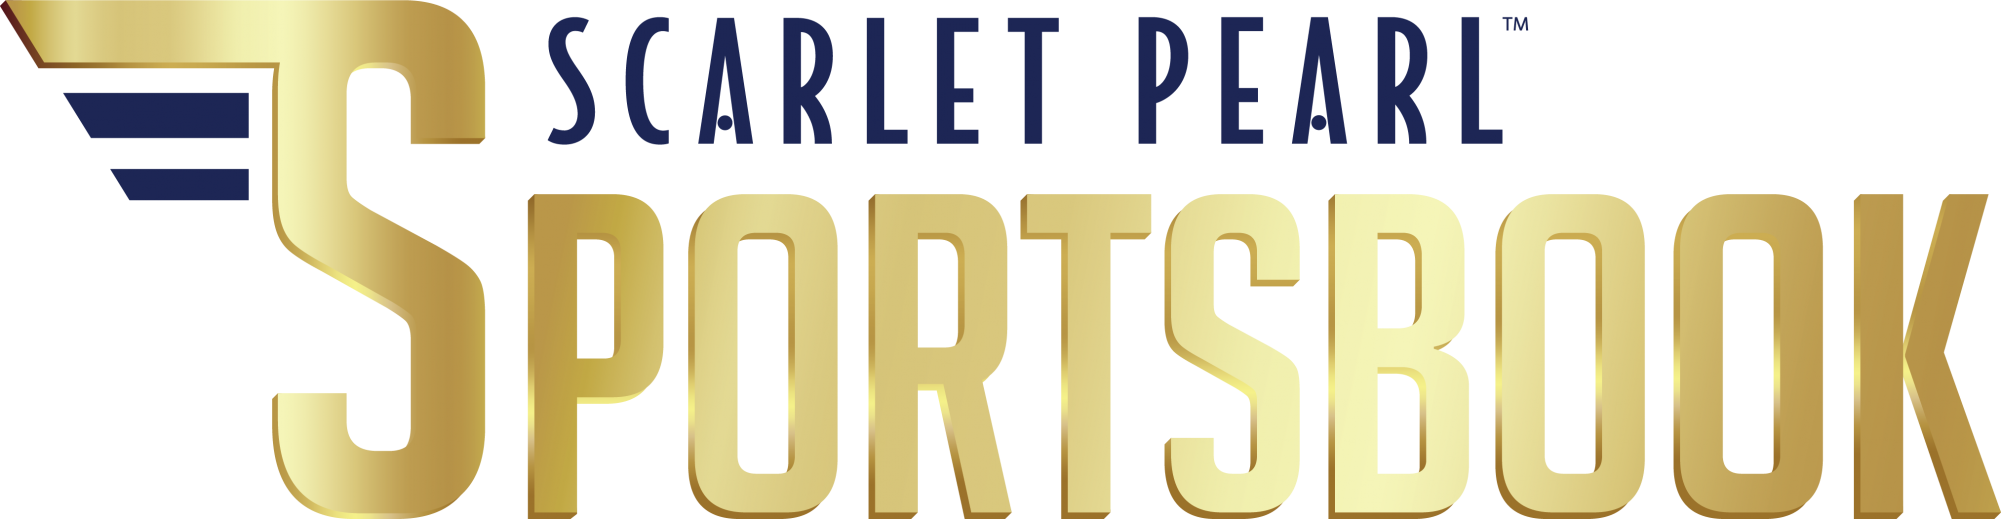 Scarlet Pearl Sportsbook at Scarlet Pearl Casino Resort in D'Ibeville near Biloxi